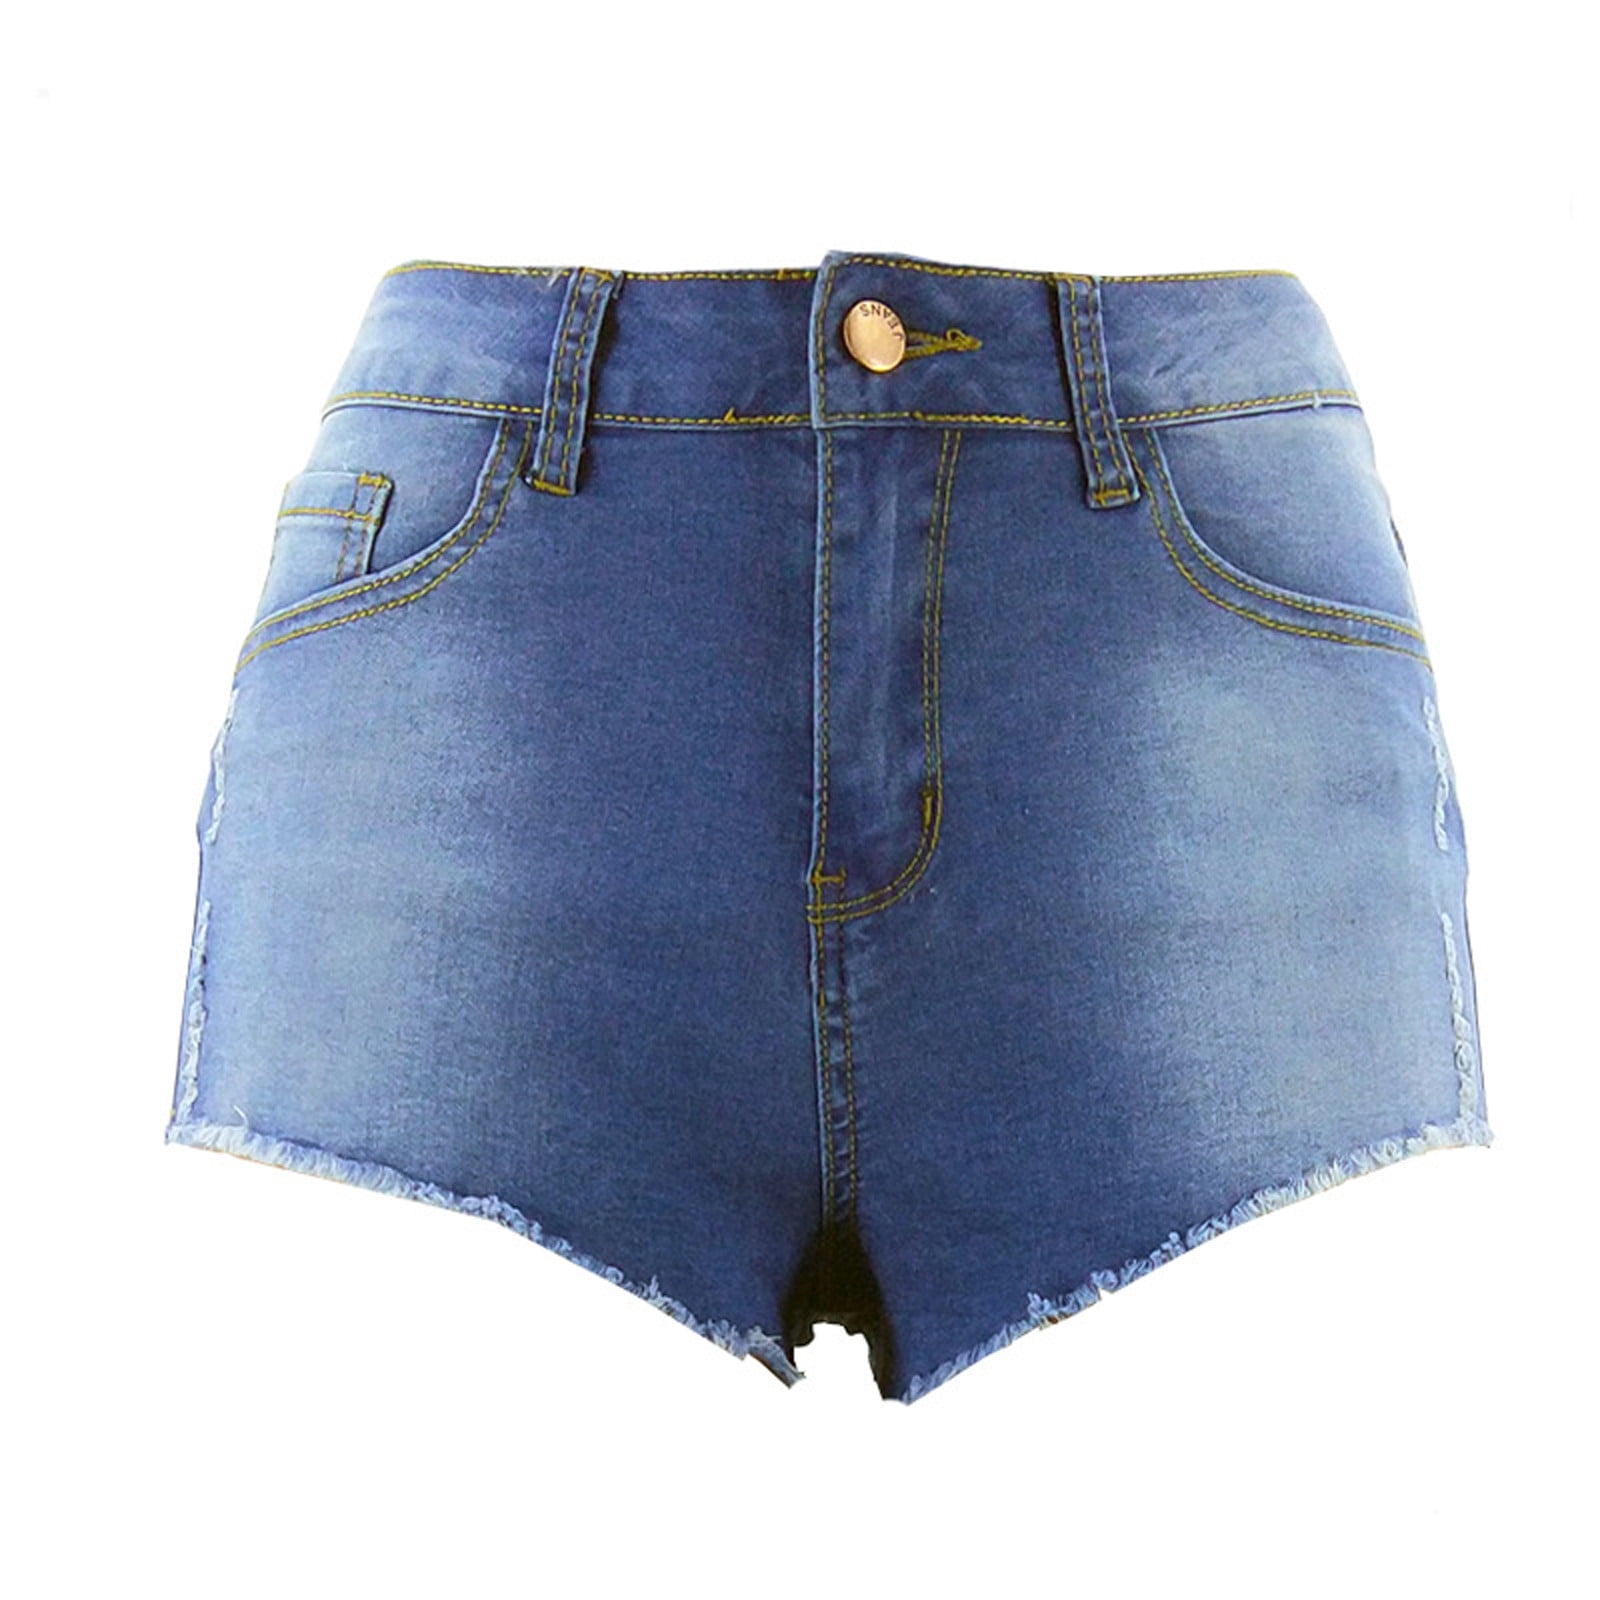 Finelylove Womens Elastic Waist Shorts Womens Spandex Shorts Jean High  Waist Rise Solid Light blue S 